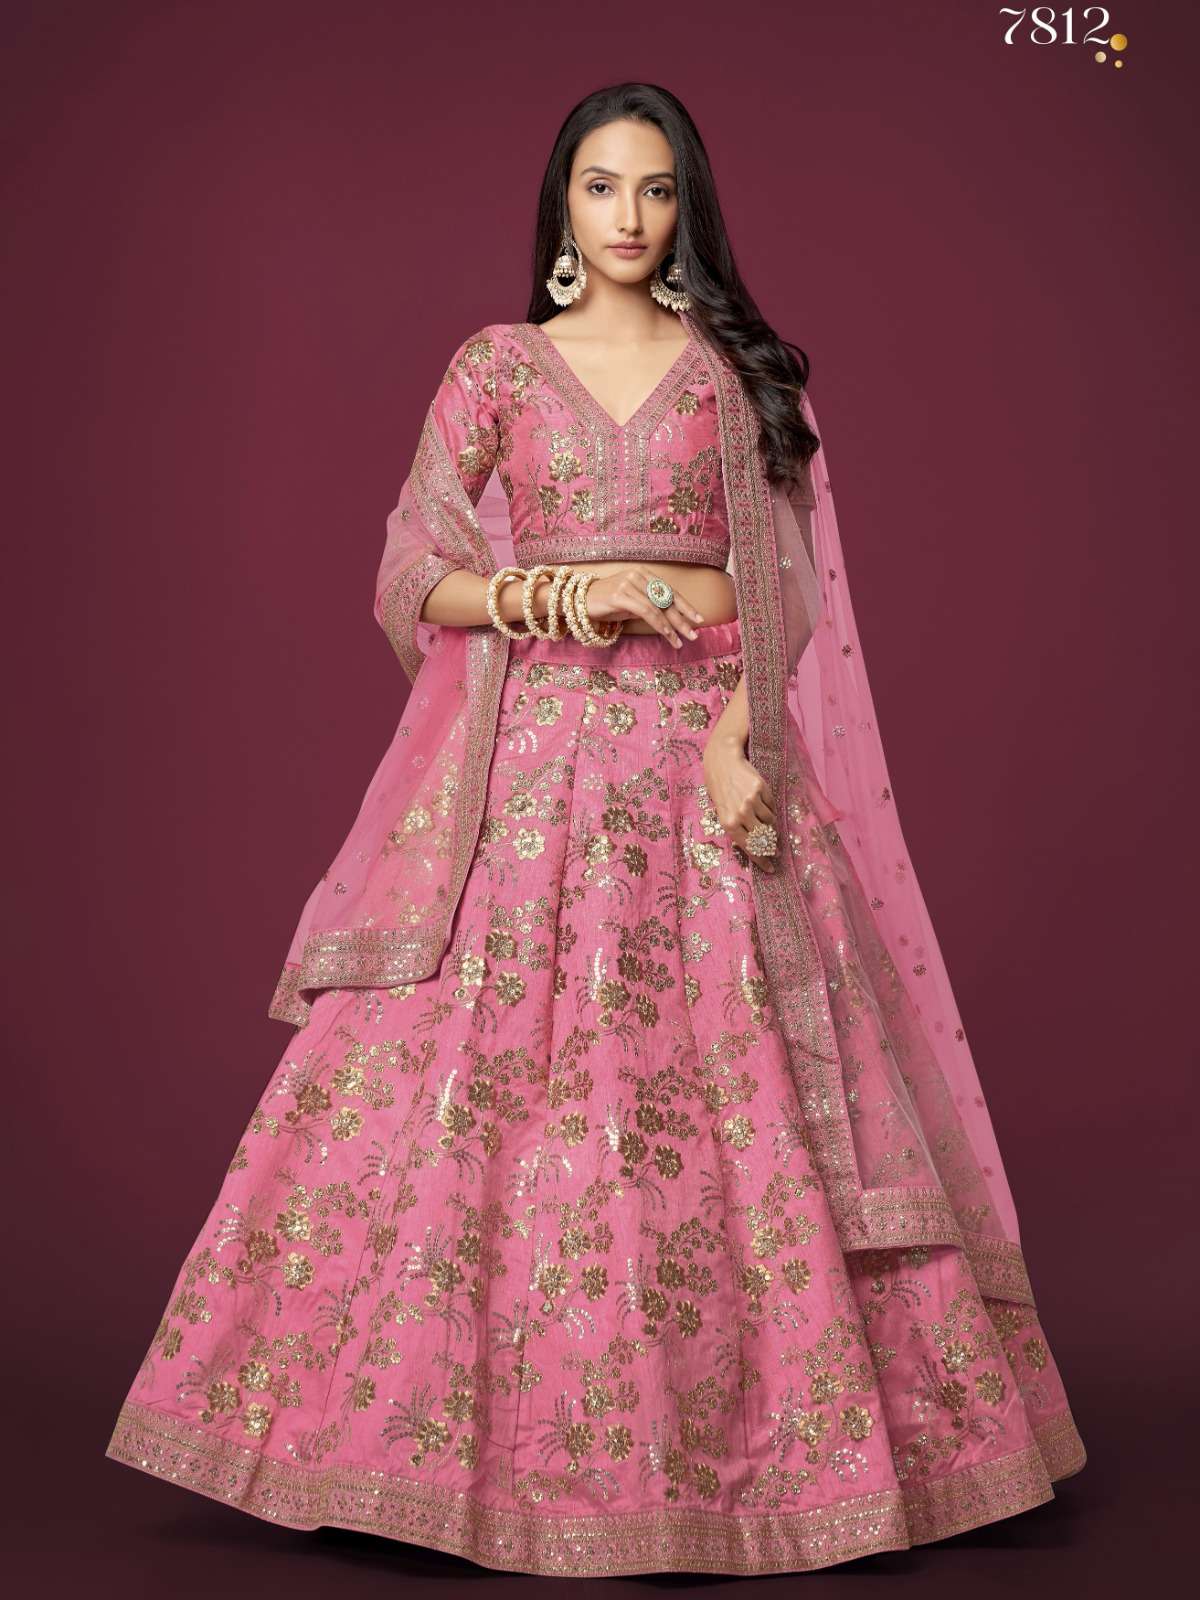 zeel 7812 wedding wear pink color fantastic single lehenga choli 